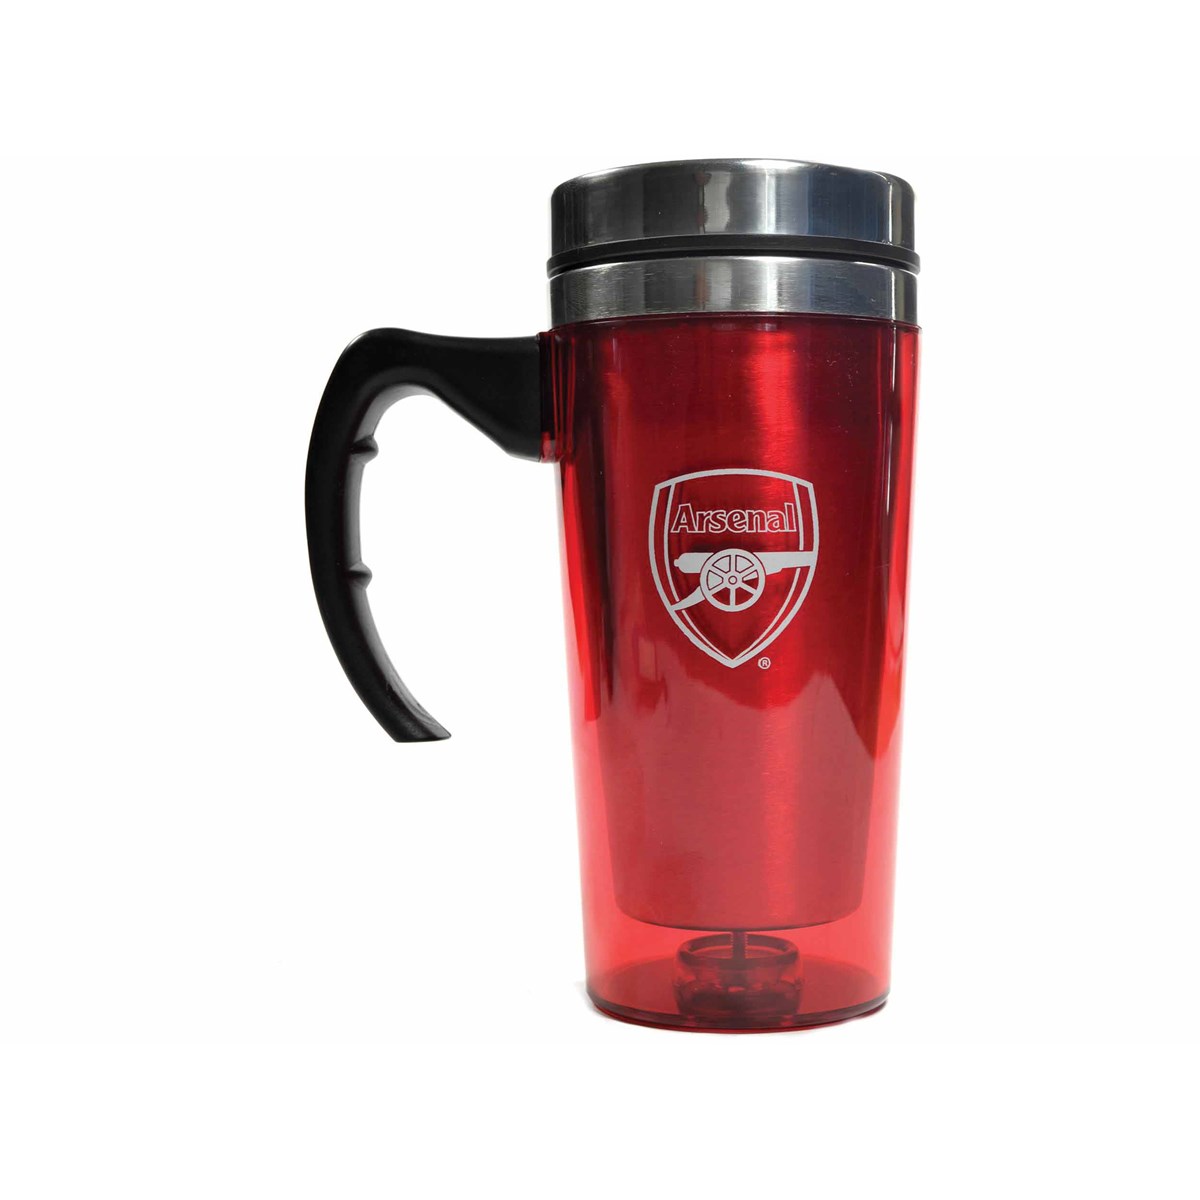 Arsenal FC Handled Travel Mug 